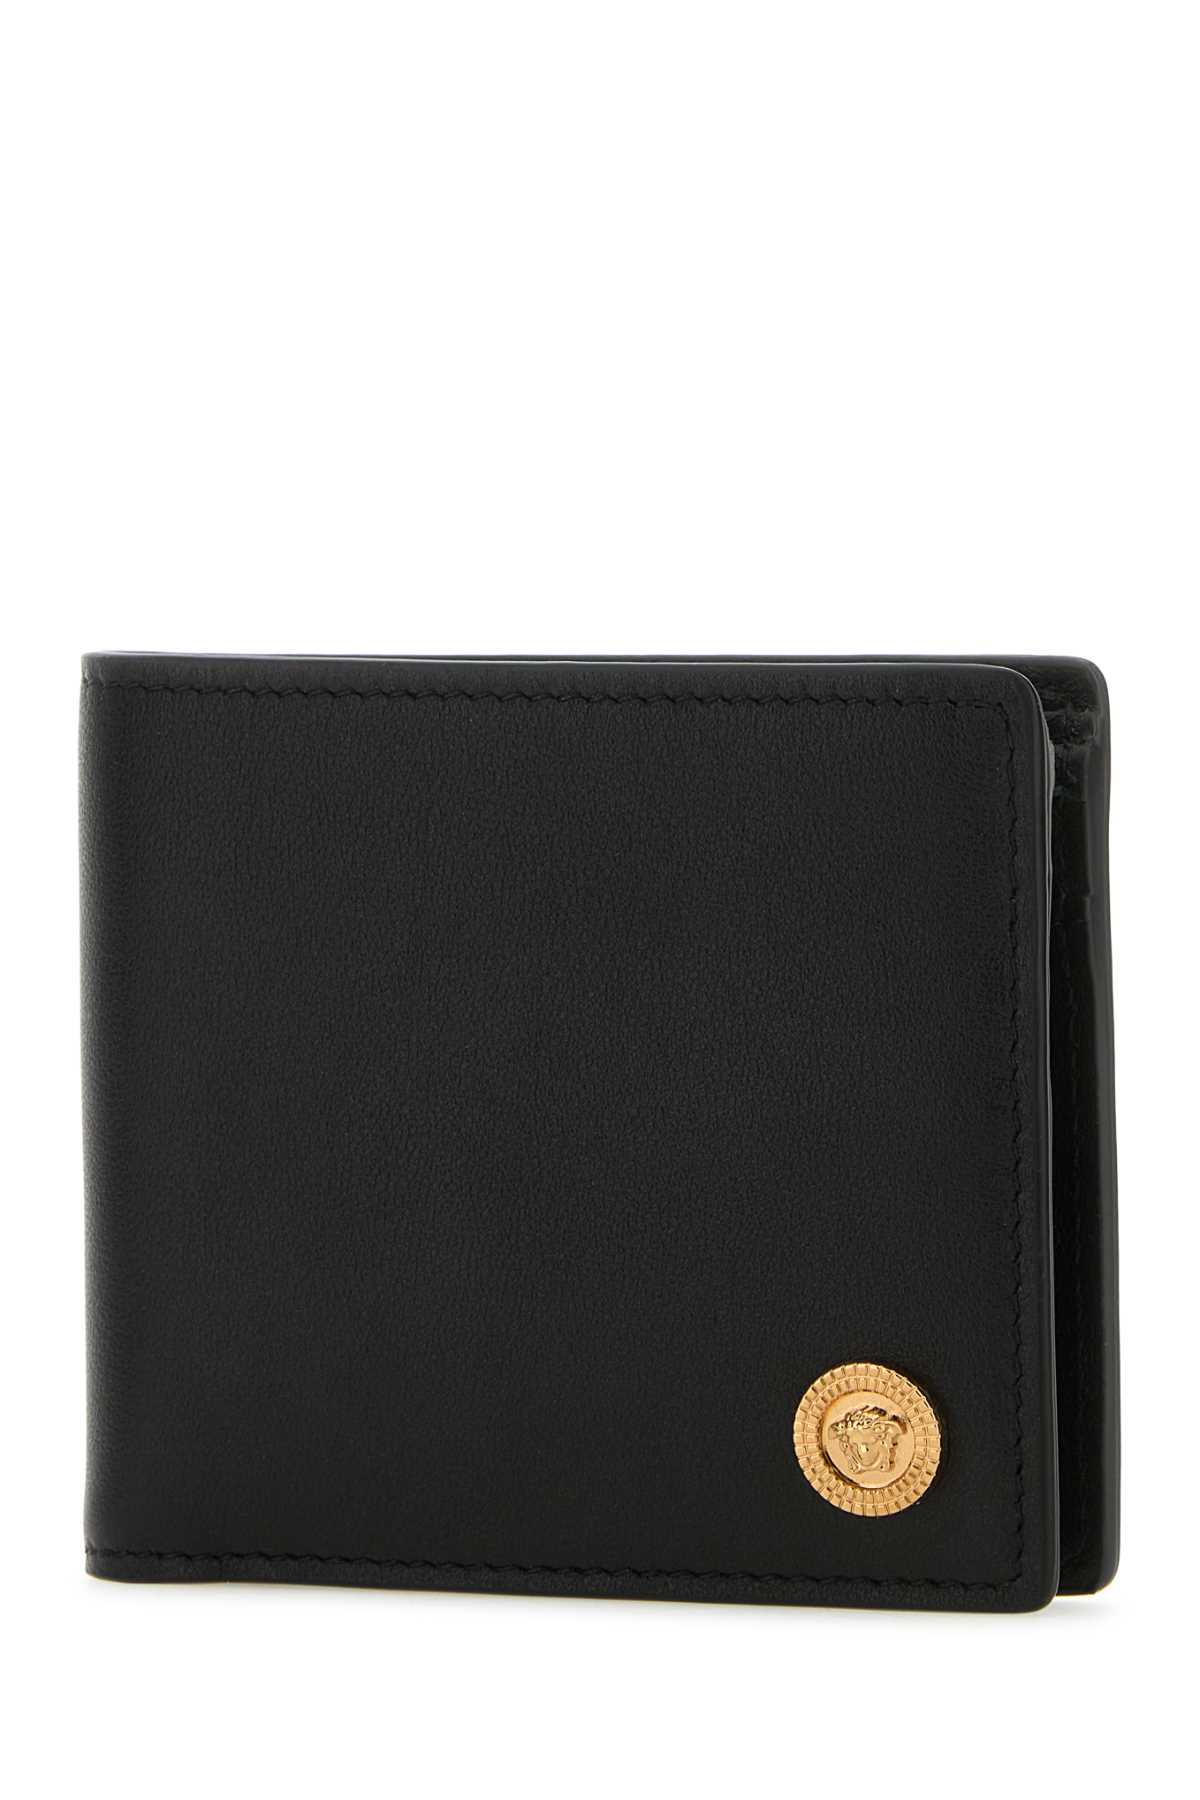 Versace Black Leather Wallet In Blackgold